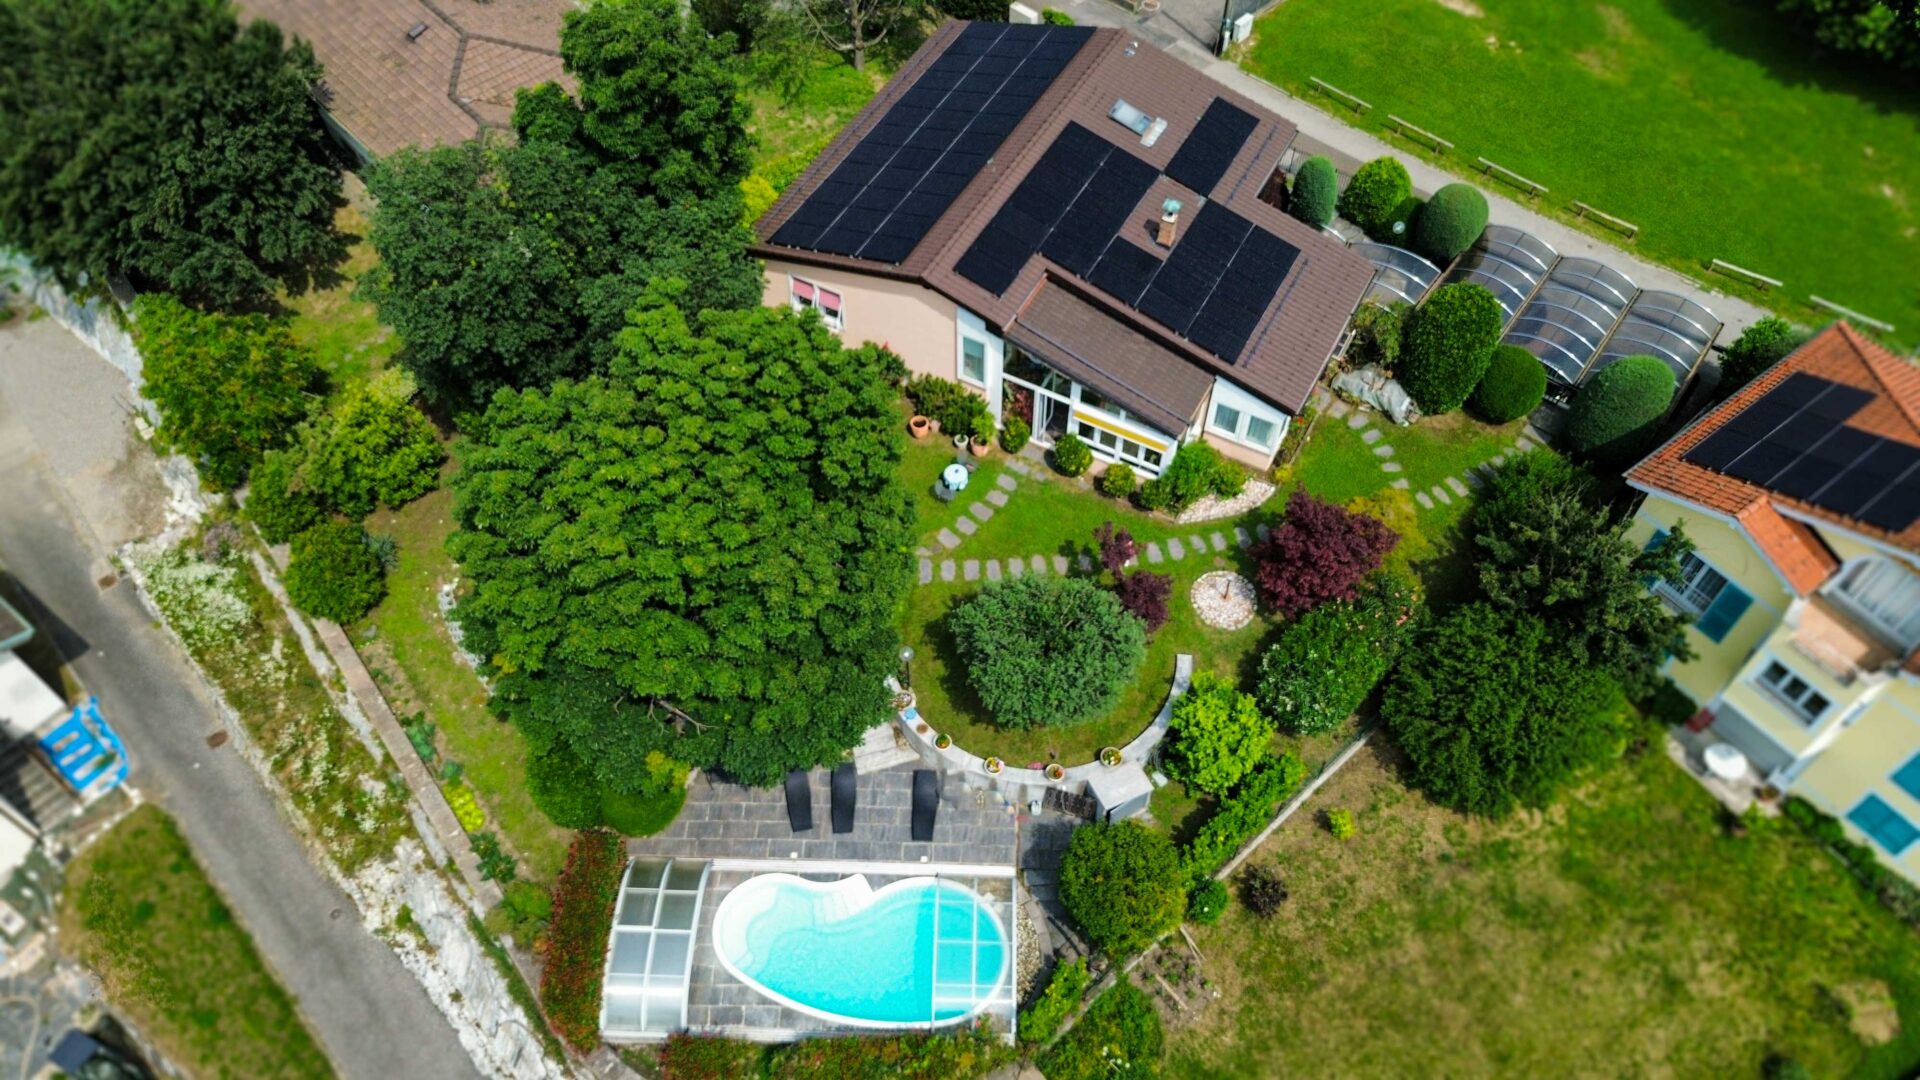 Splendida villa con grande giardino e piscina in vendita a Castel San Pietro